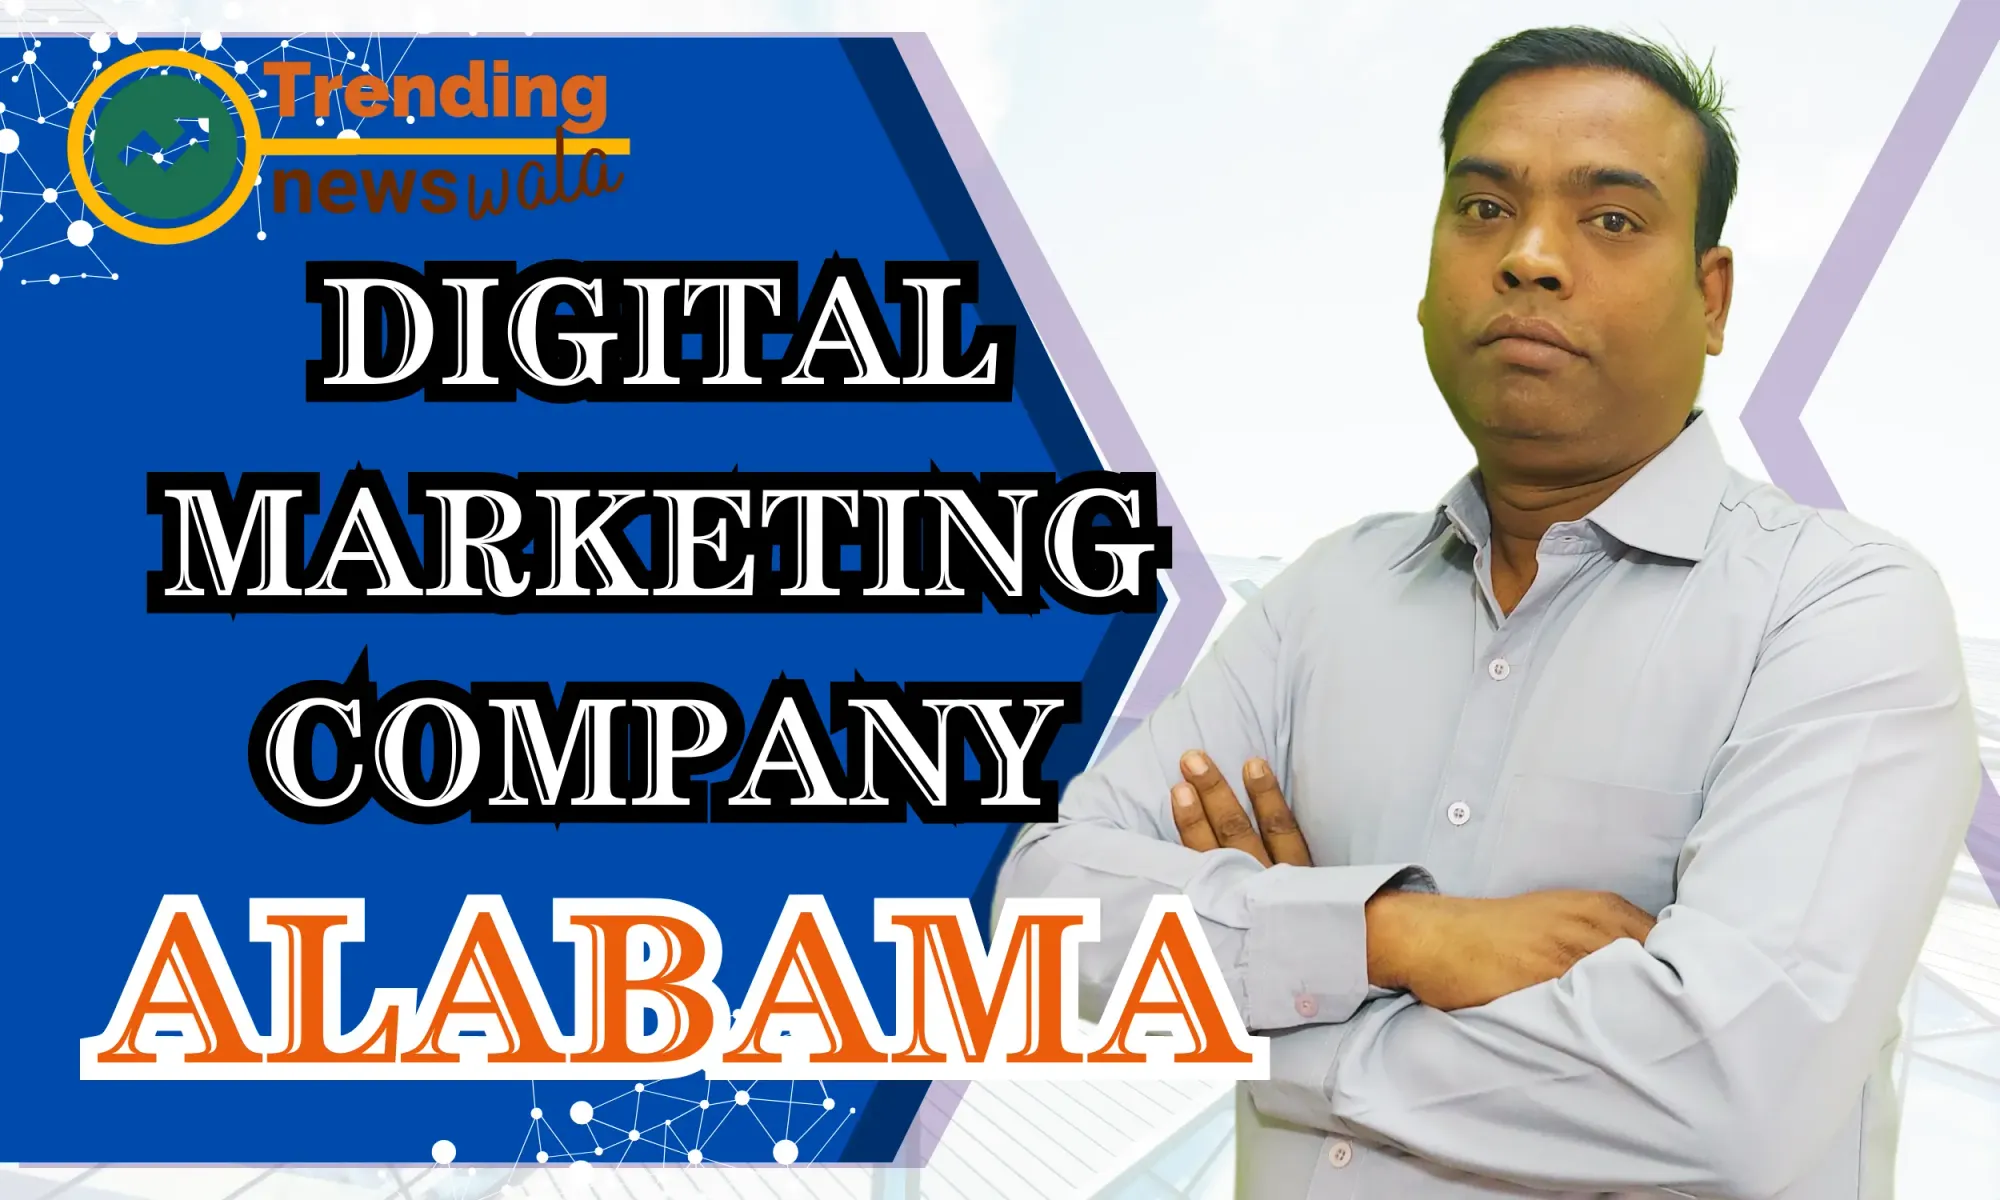 Digital Marketing Company In Alabama